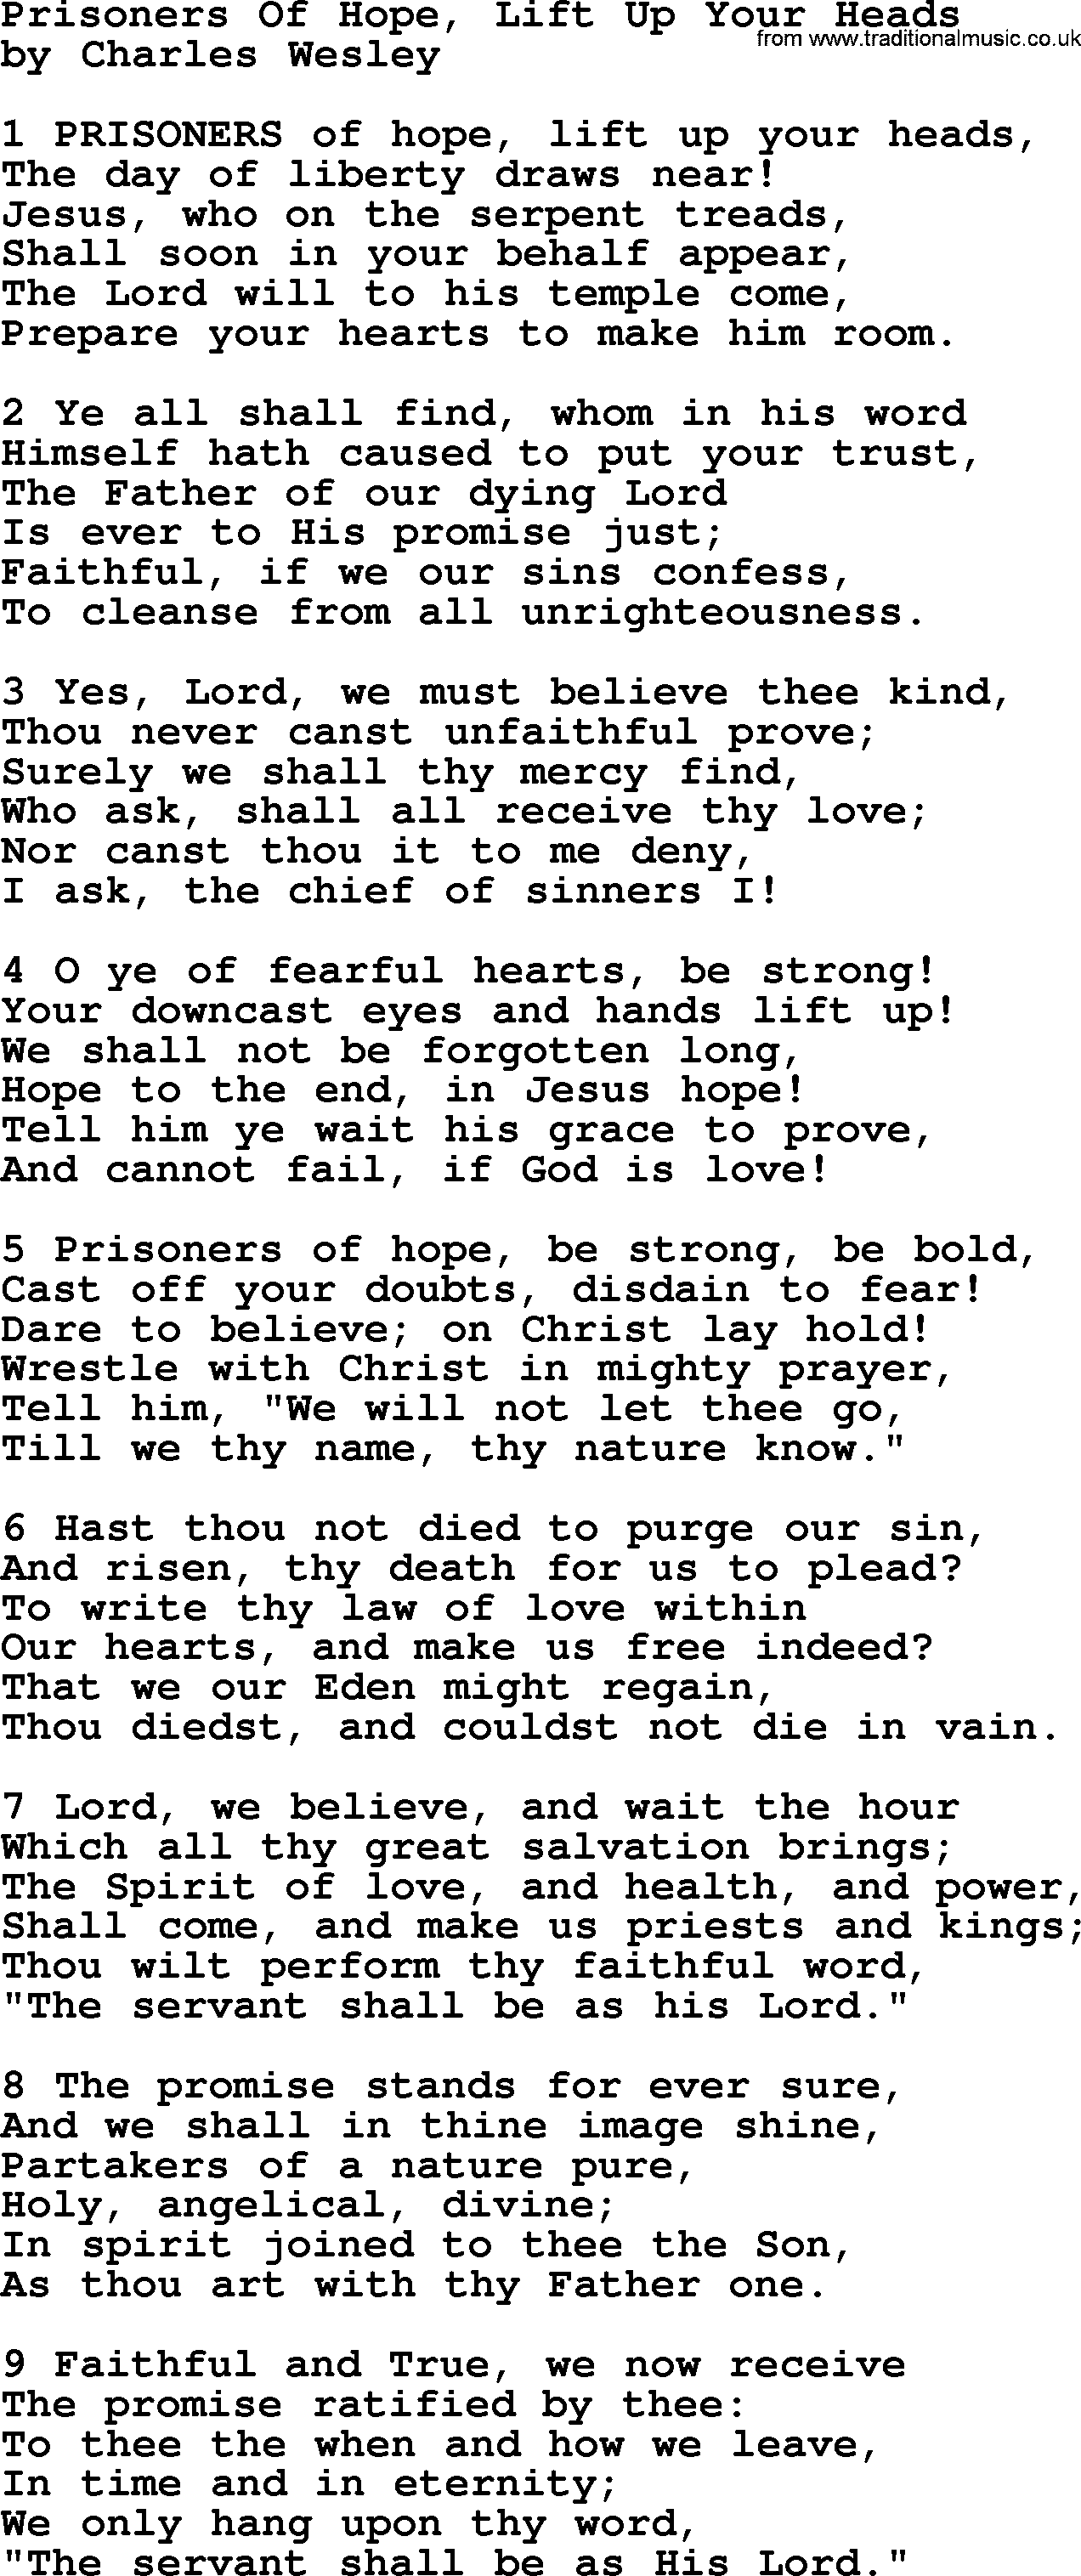 Charles Wesley hymn: Prisoners Of Hope, Lift Up Your Heads, lyrics